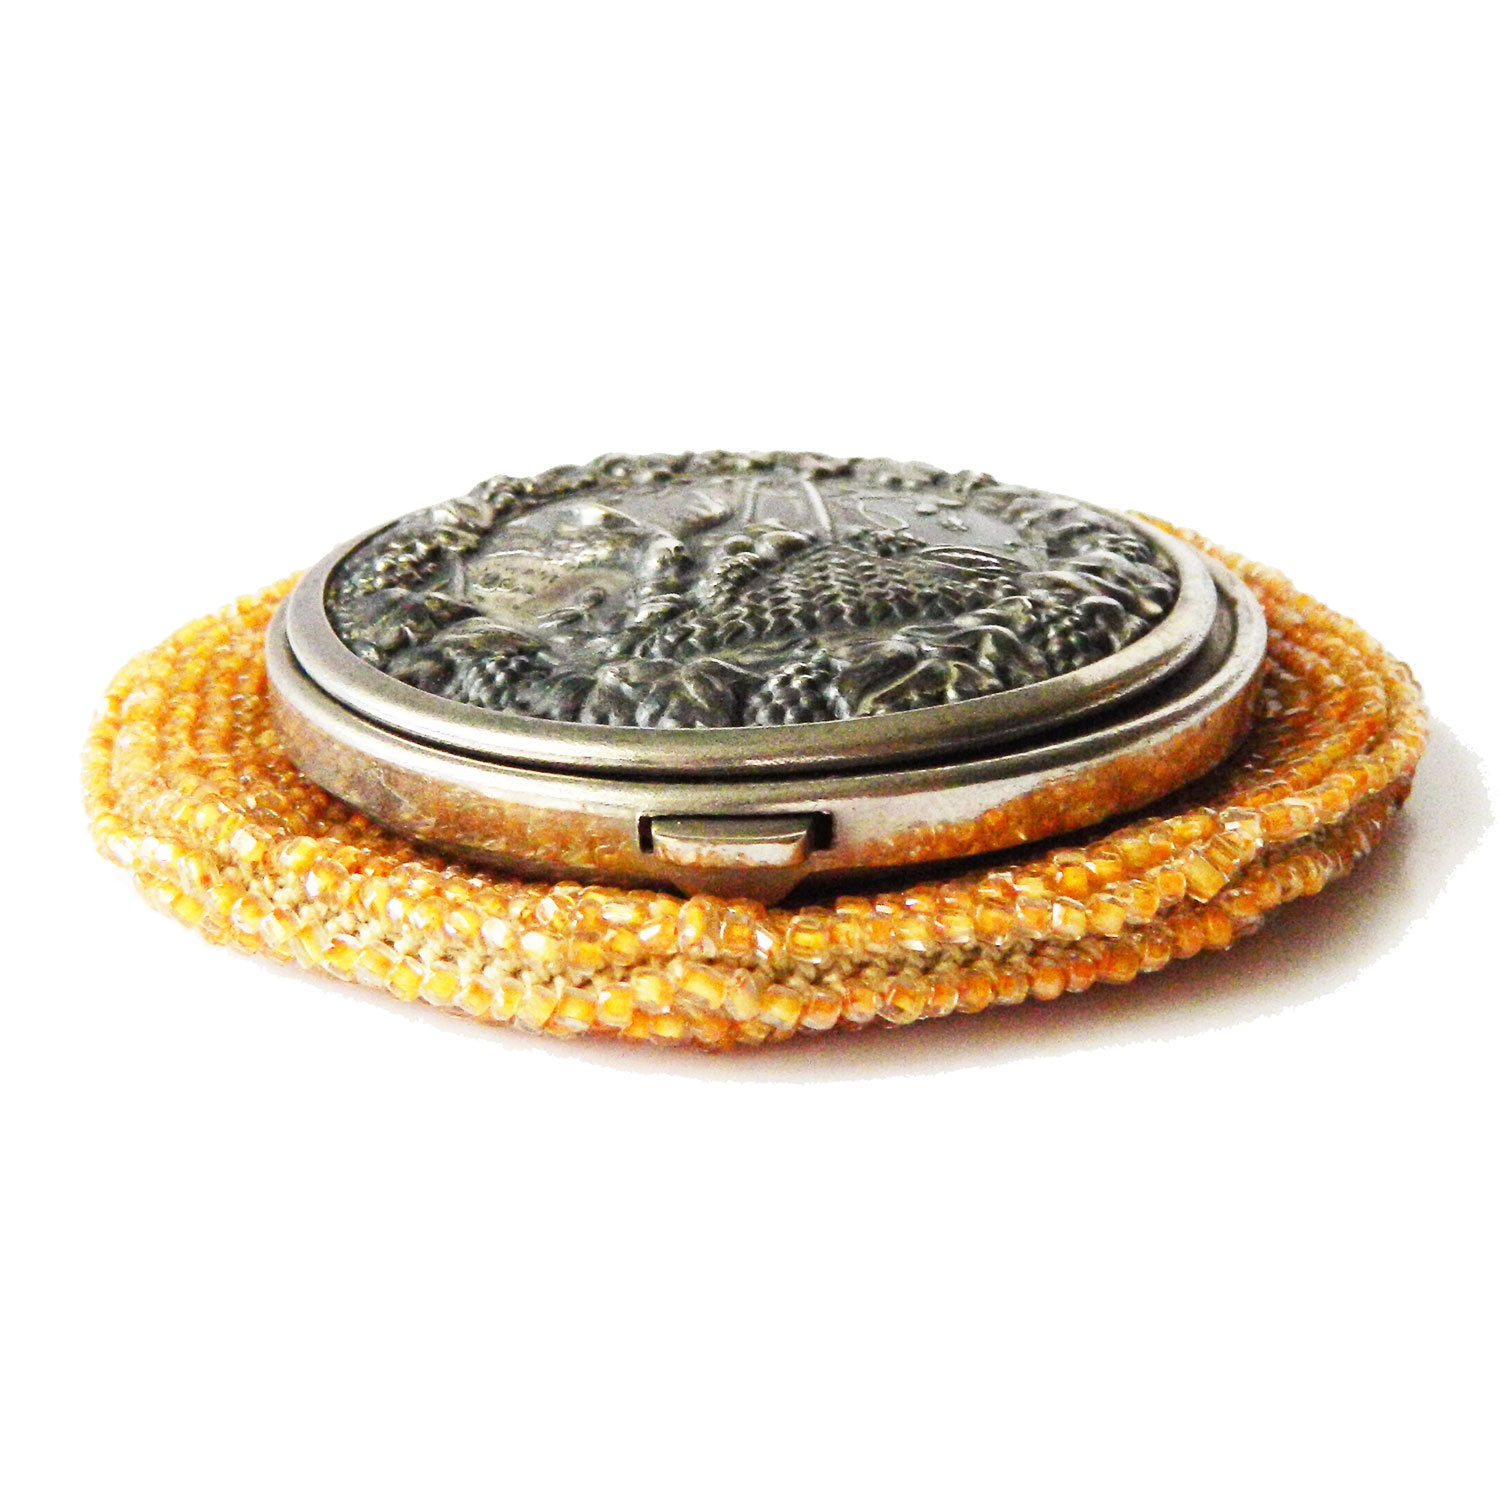 Antique beaded coin purse